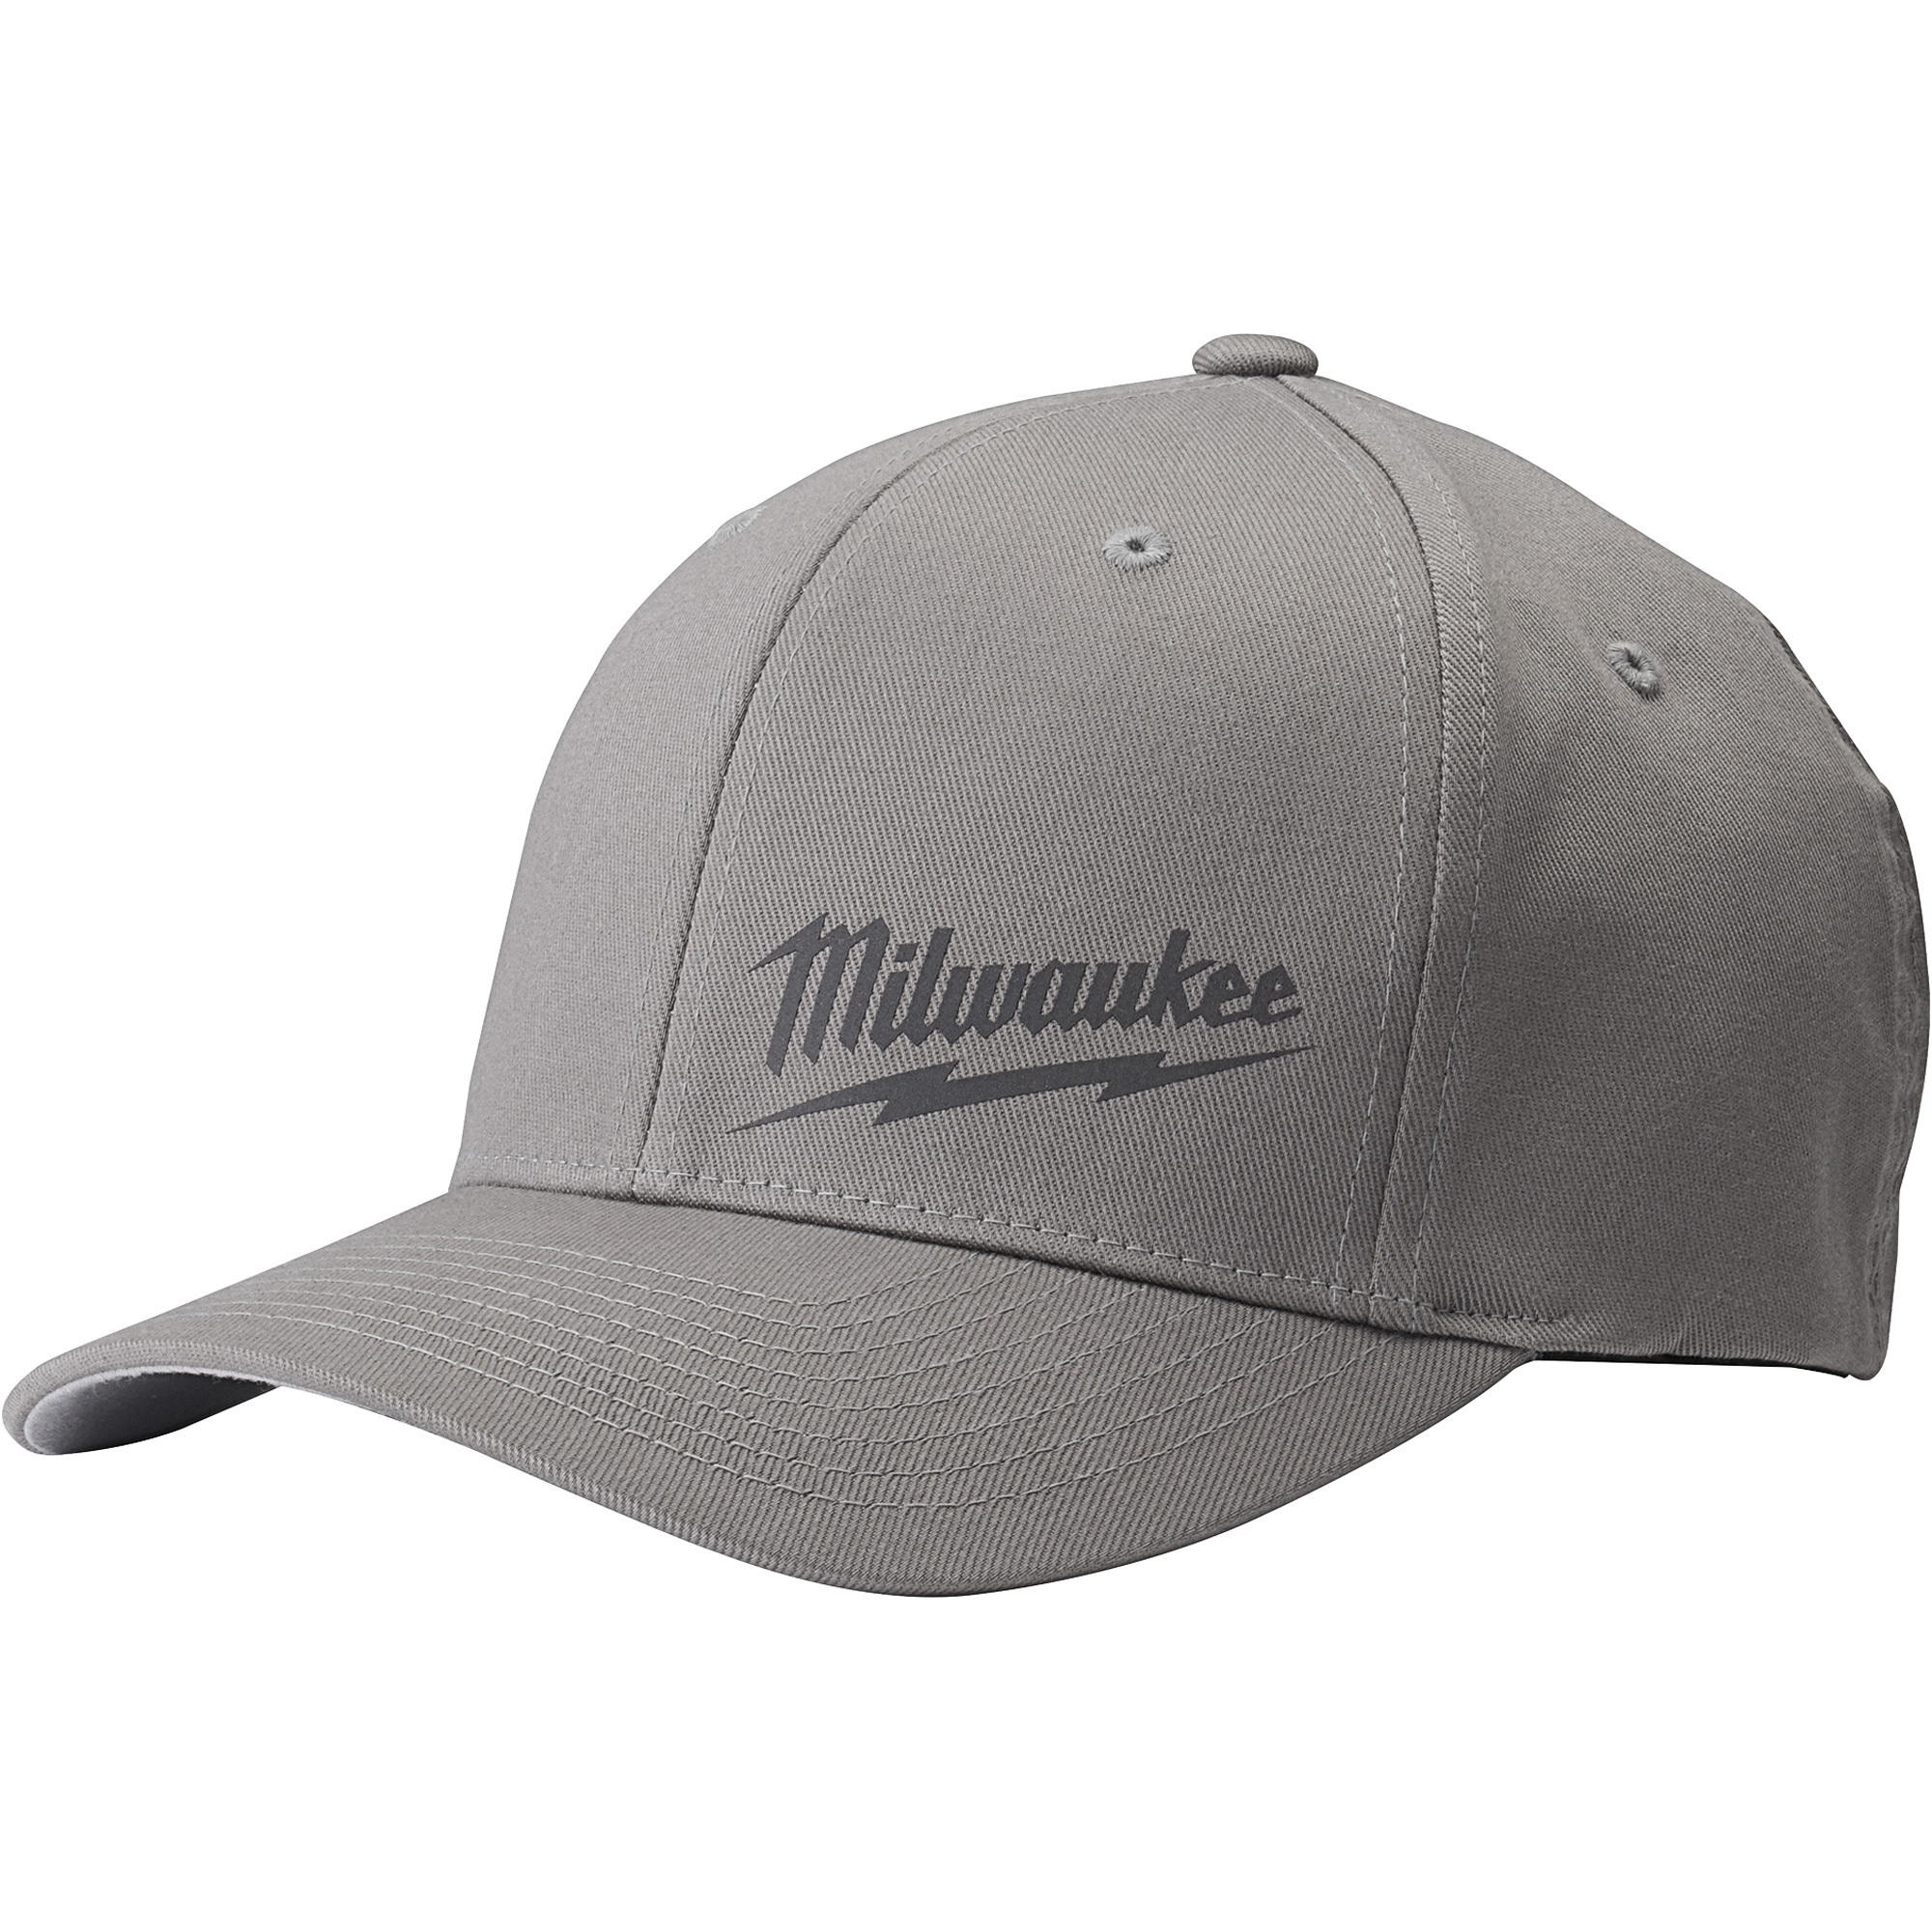 Milwaukee Men's FLEXFIT Fitted Hat, Gray, S/M, Model 504G-SM